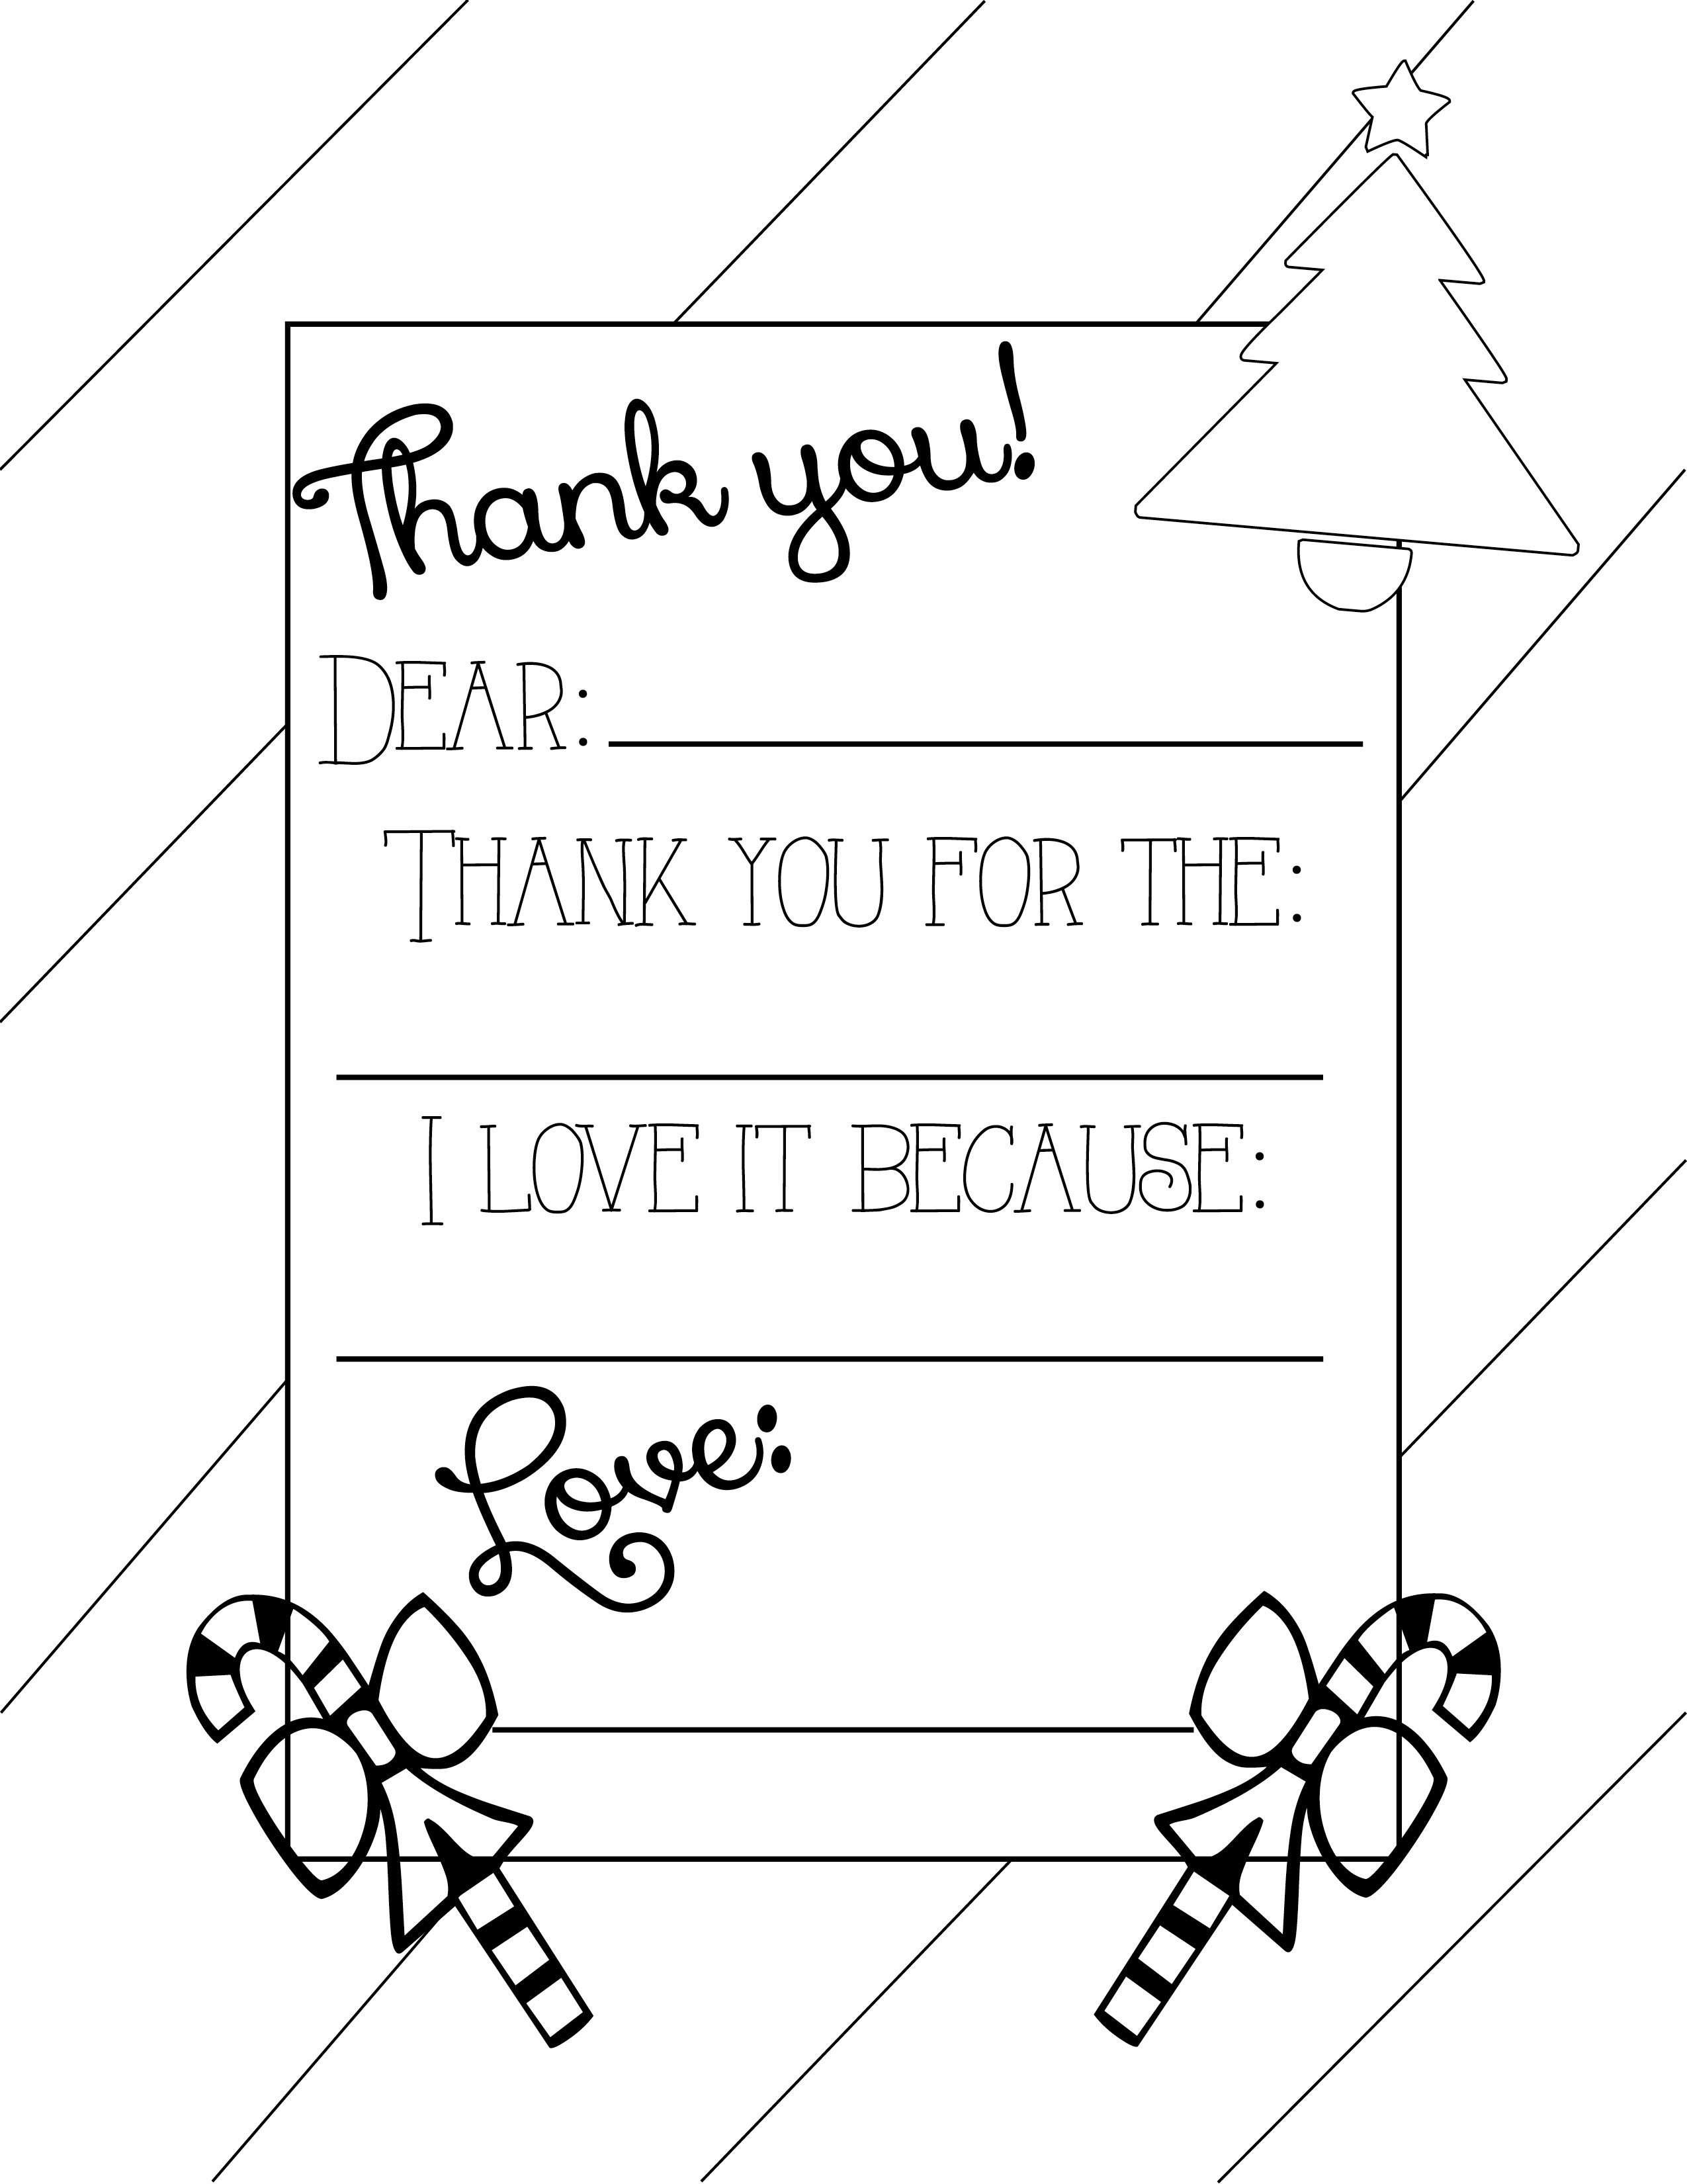 Free Printable Thank You Card For Christmas Thank You Card Template Thank You Cards From Kids Teacher Cards